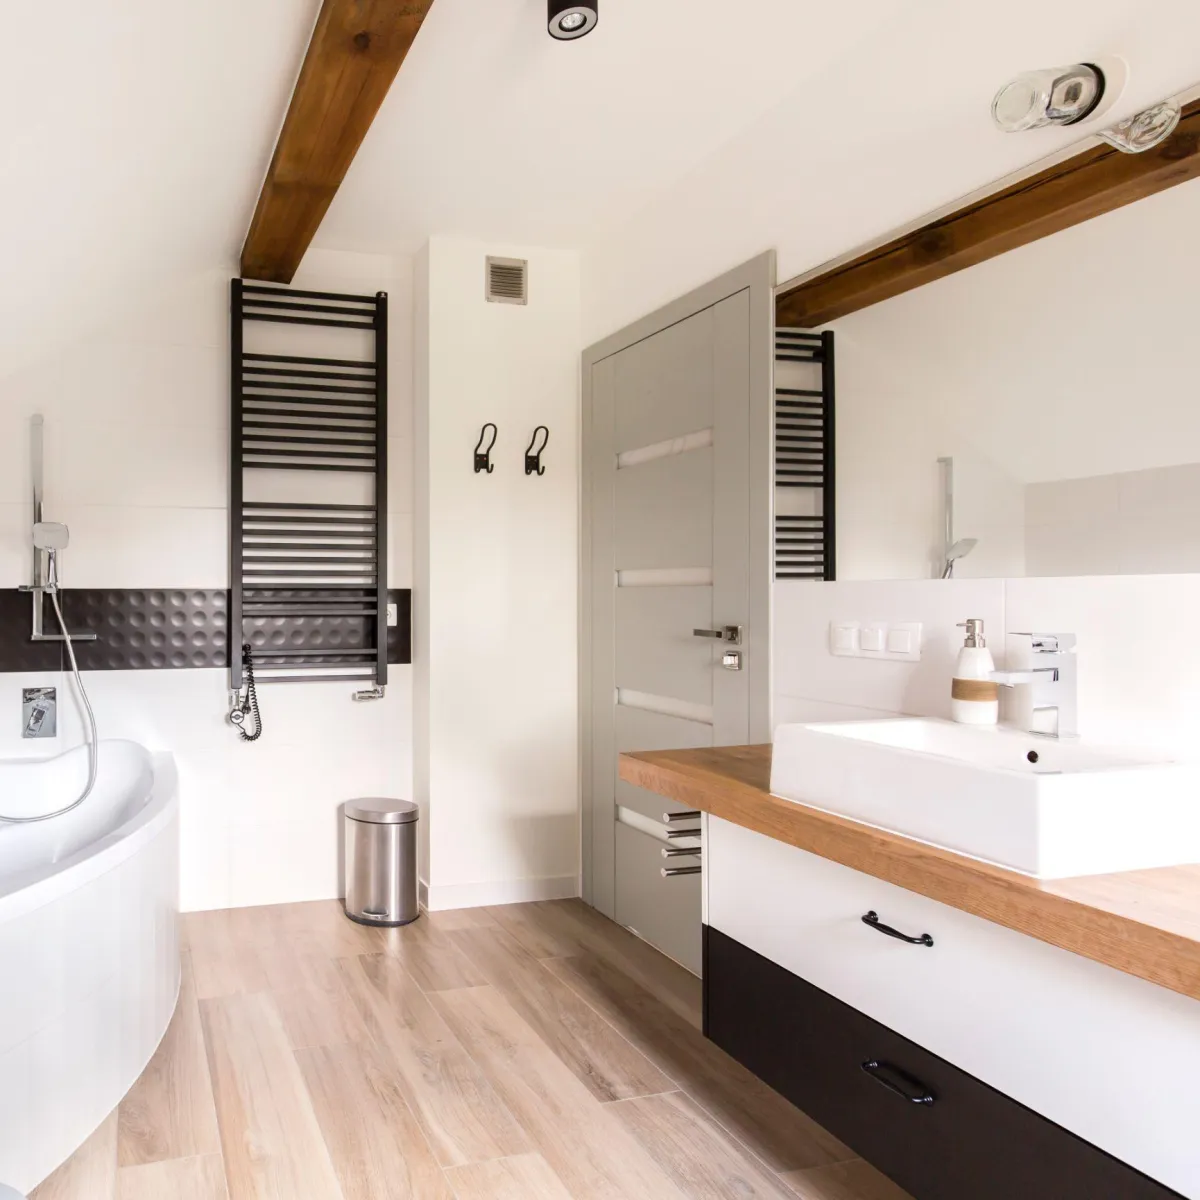 redesign small bathroom ashburn va